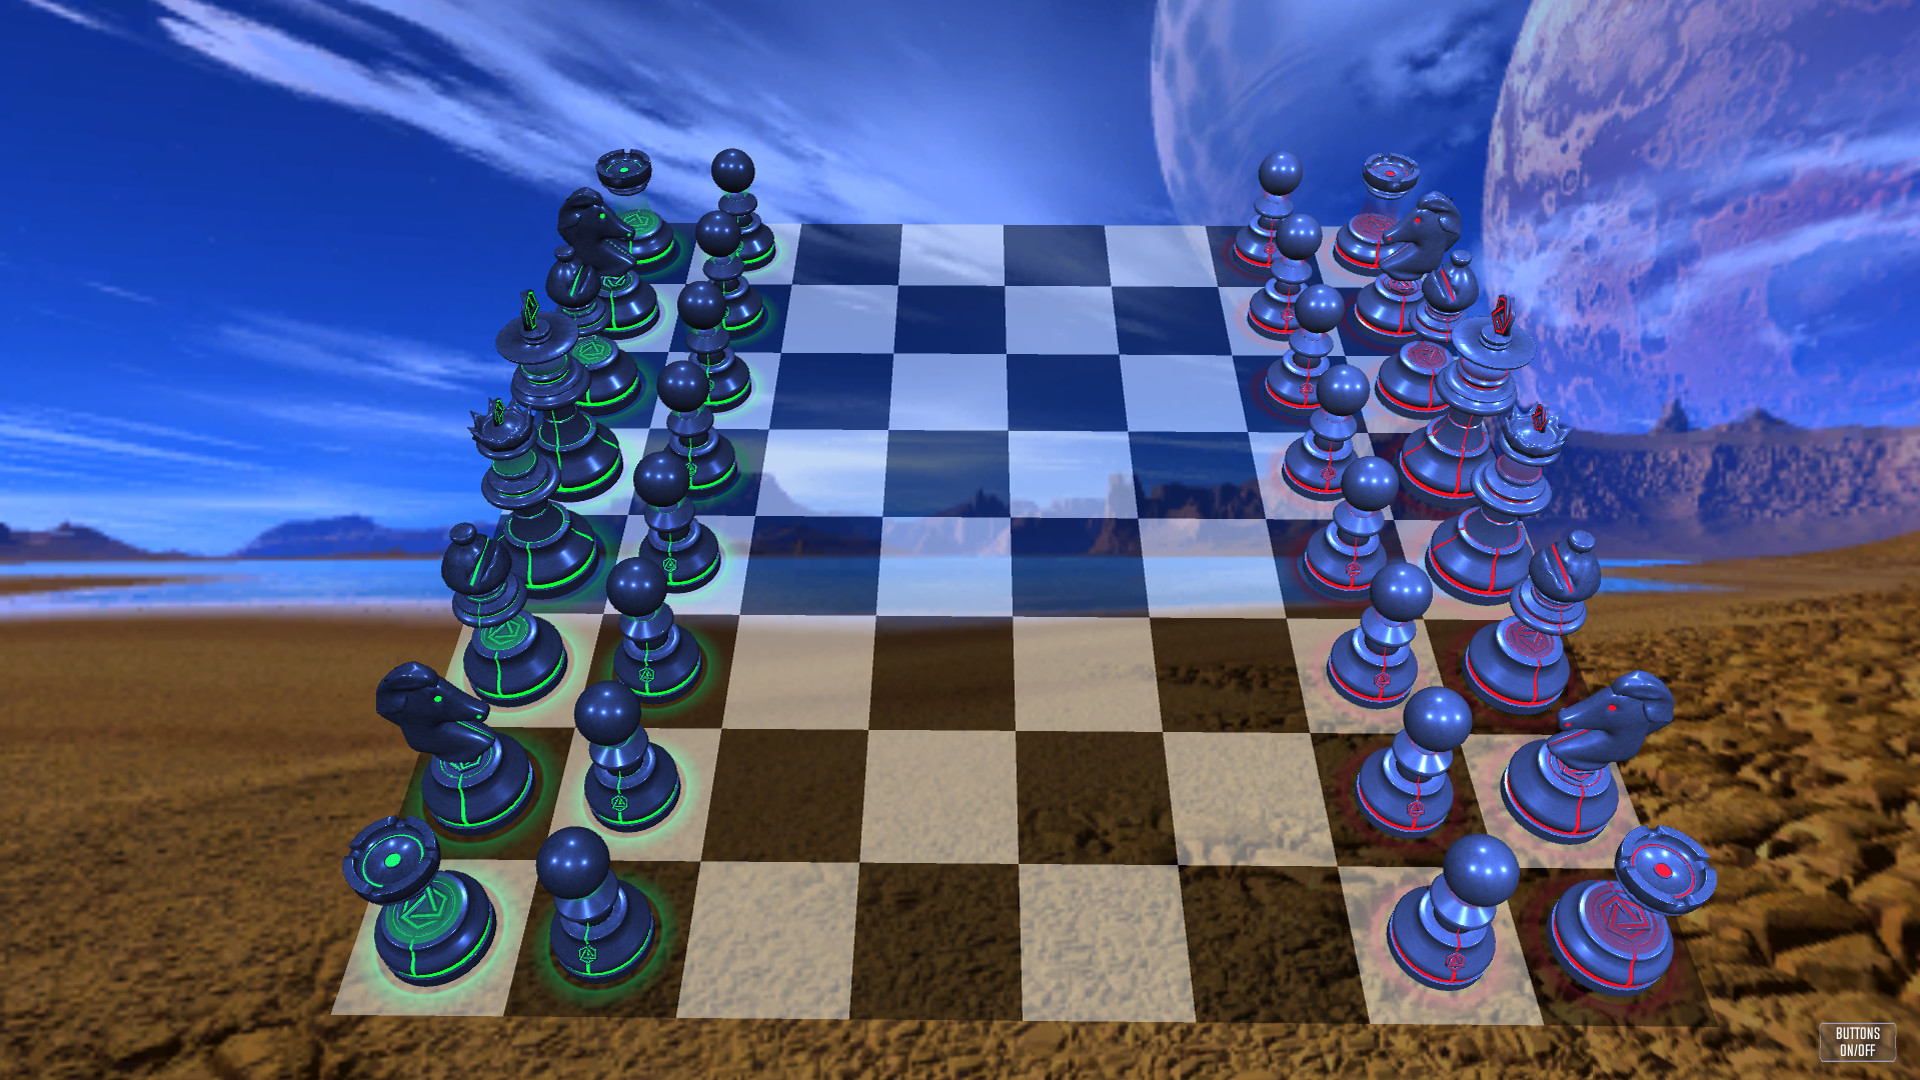 Rigid Chess Free Download